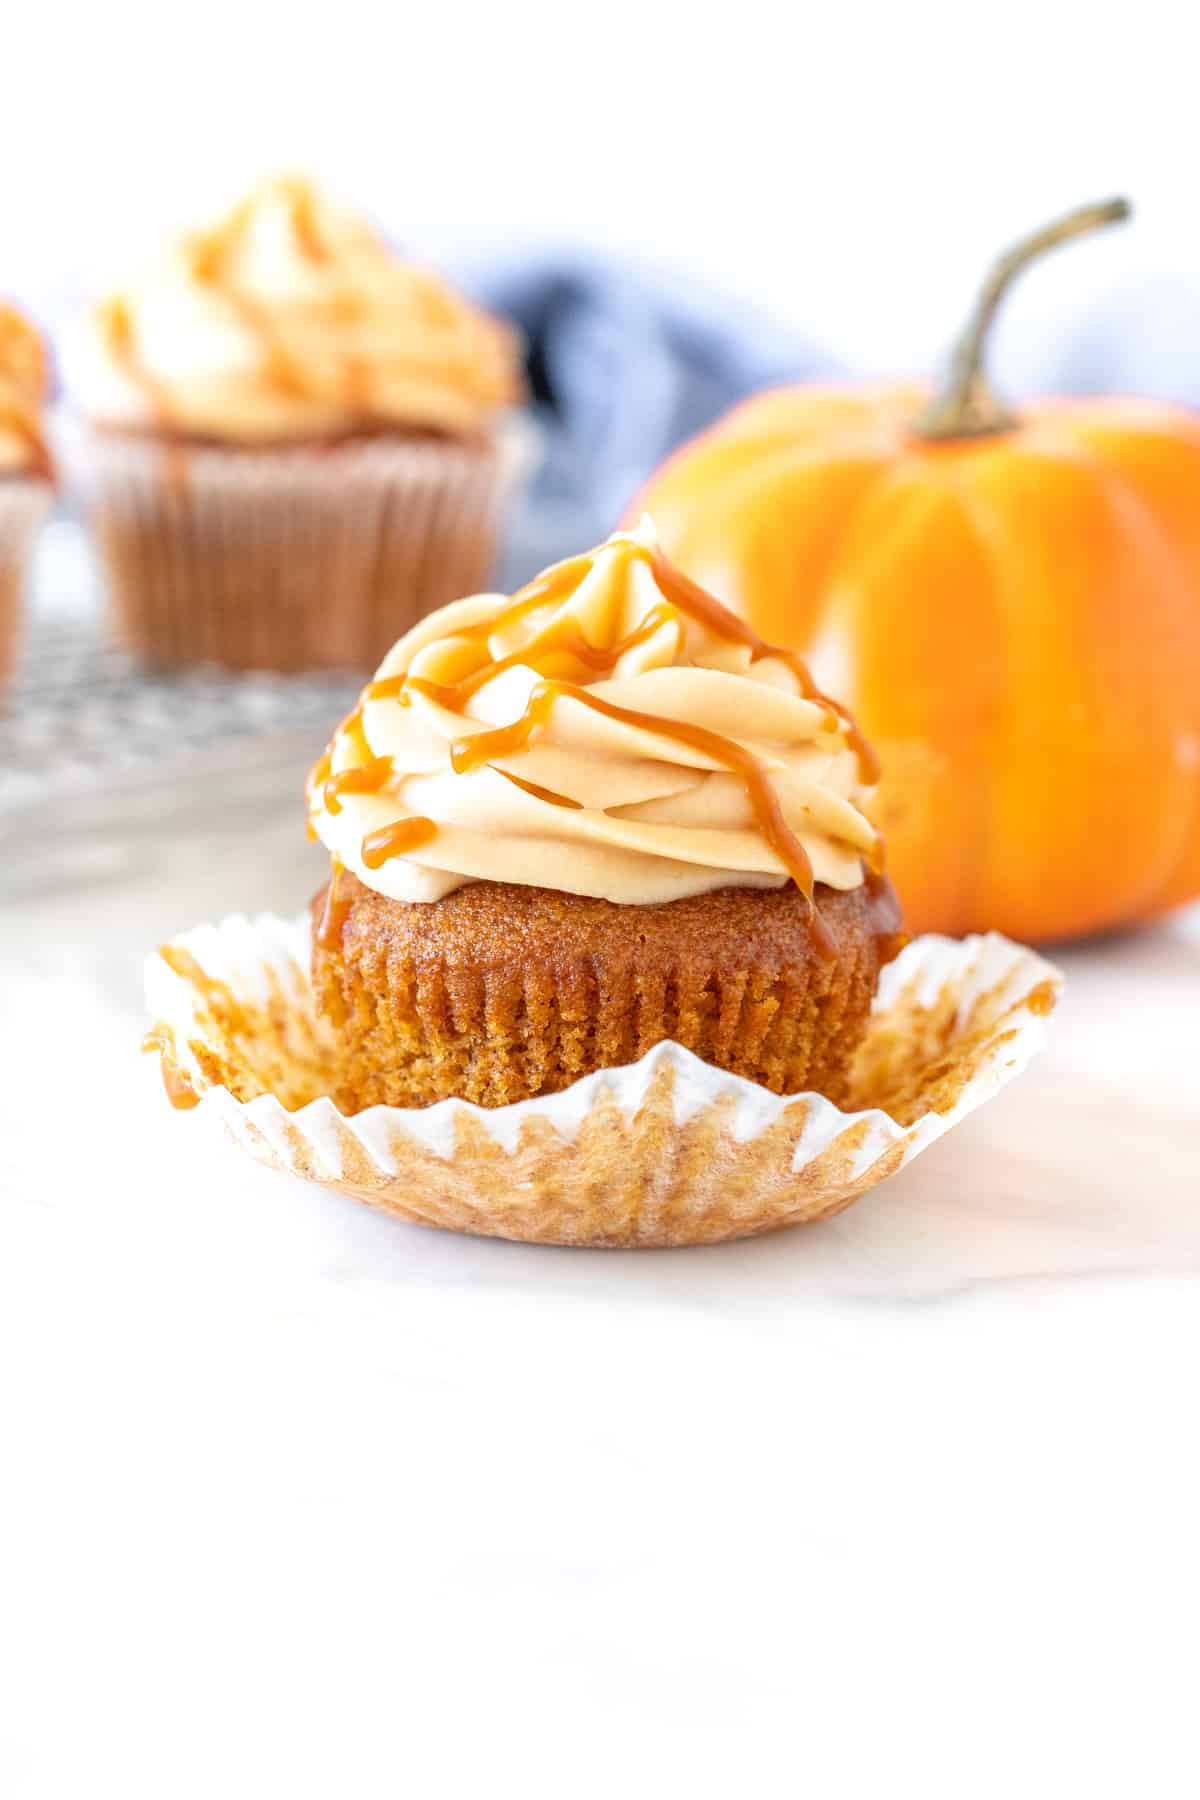 Pumpkin cupcake with caramel buttercream and a decorative pumpkin